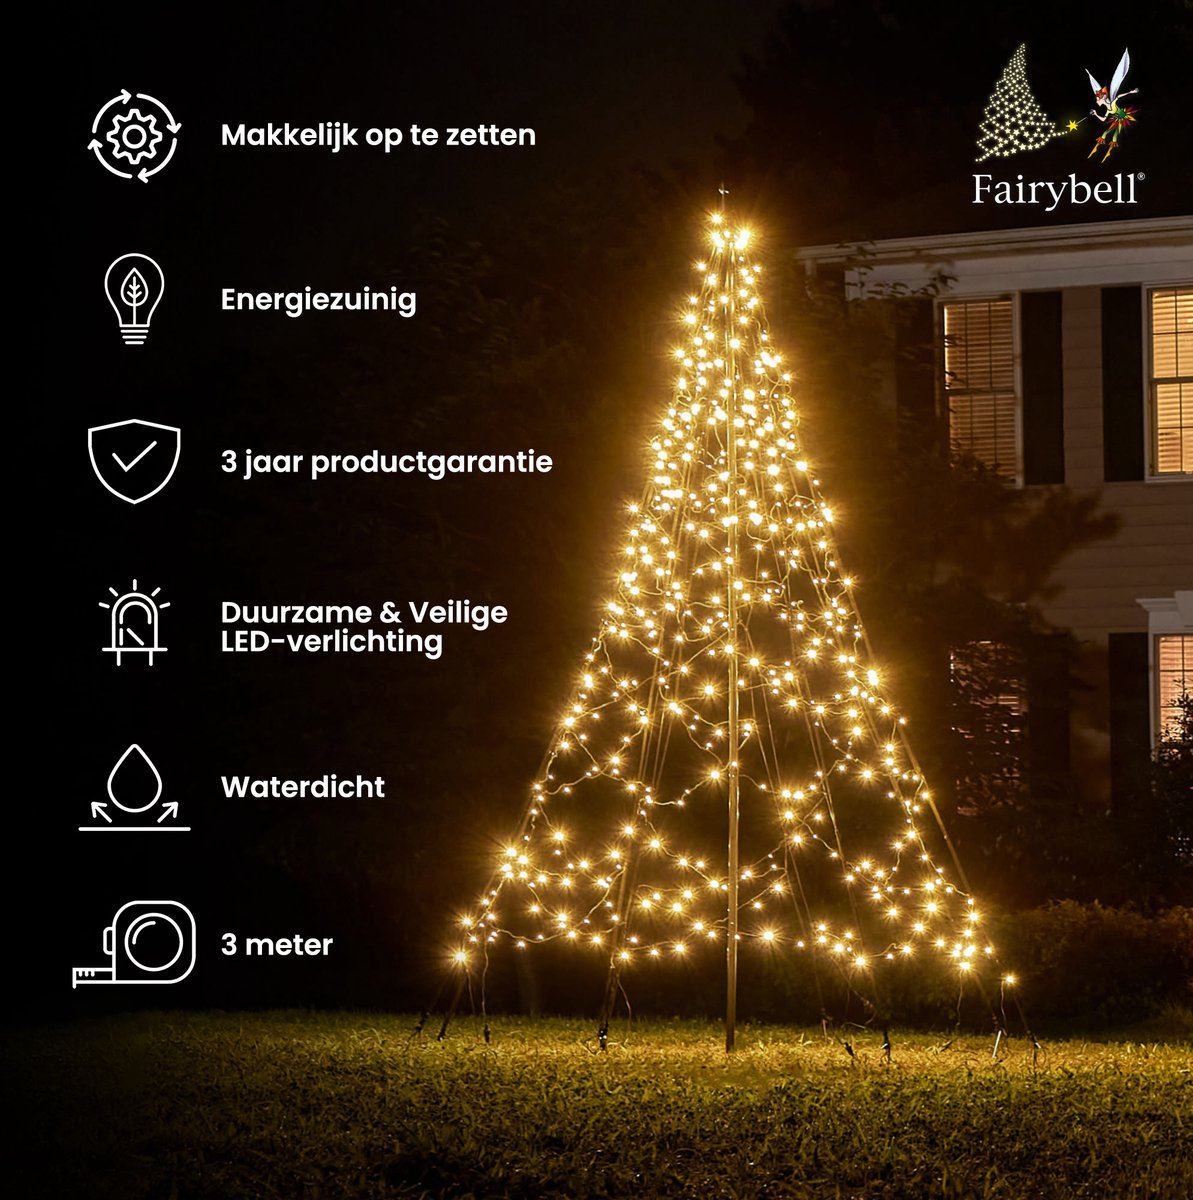 Fairybell-kerstverlichting-kerstboom-buiten-met-vlaggenmast-met-twinkle-effect-300CM-hoog-480-LED-lampjes-in-warmwitte-kleur-